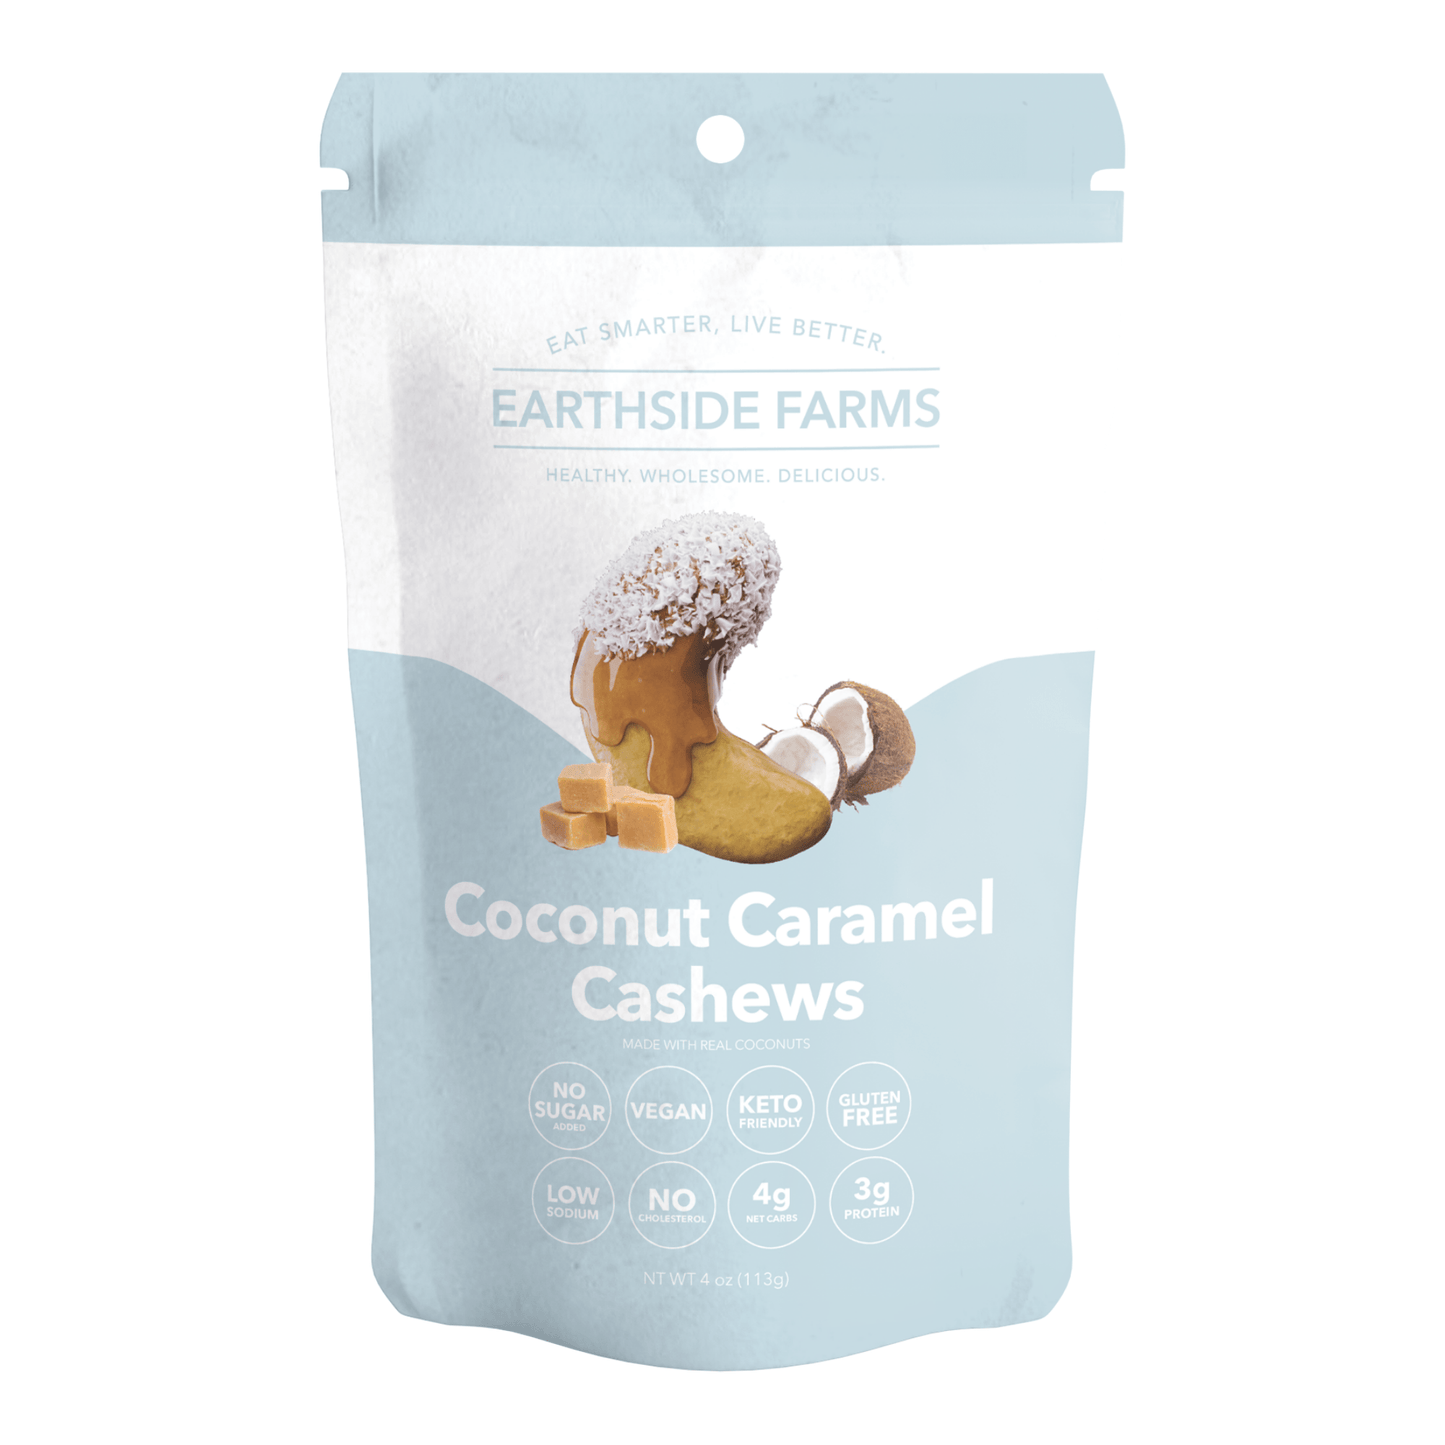 Coconut Caramel Cashews - Earthside Farms